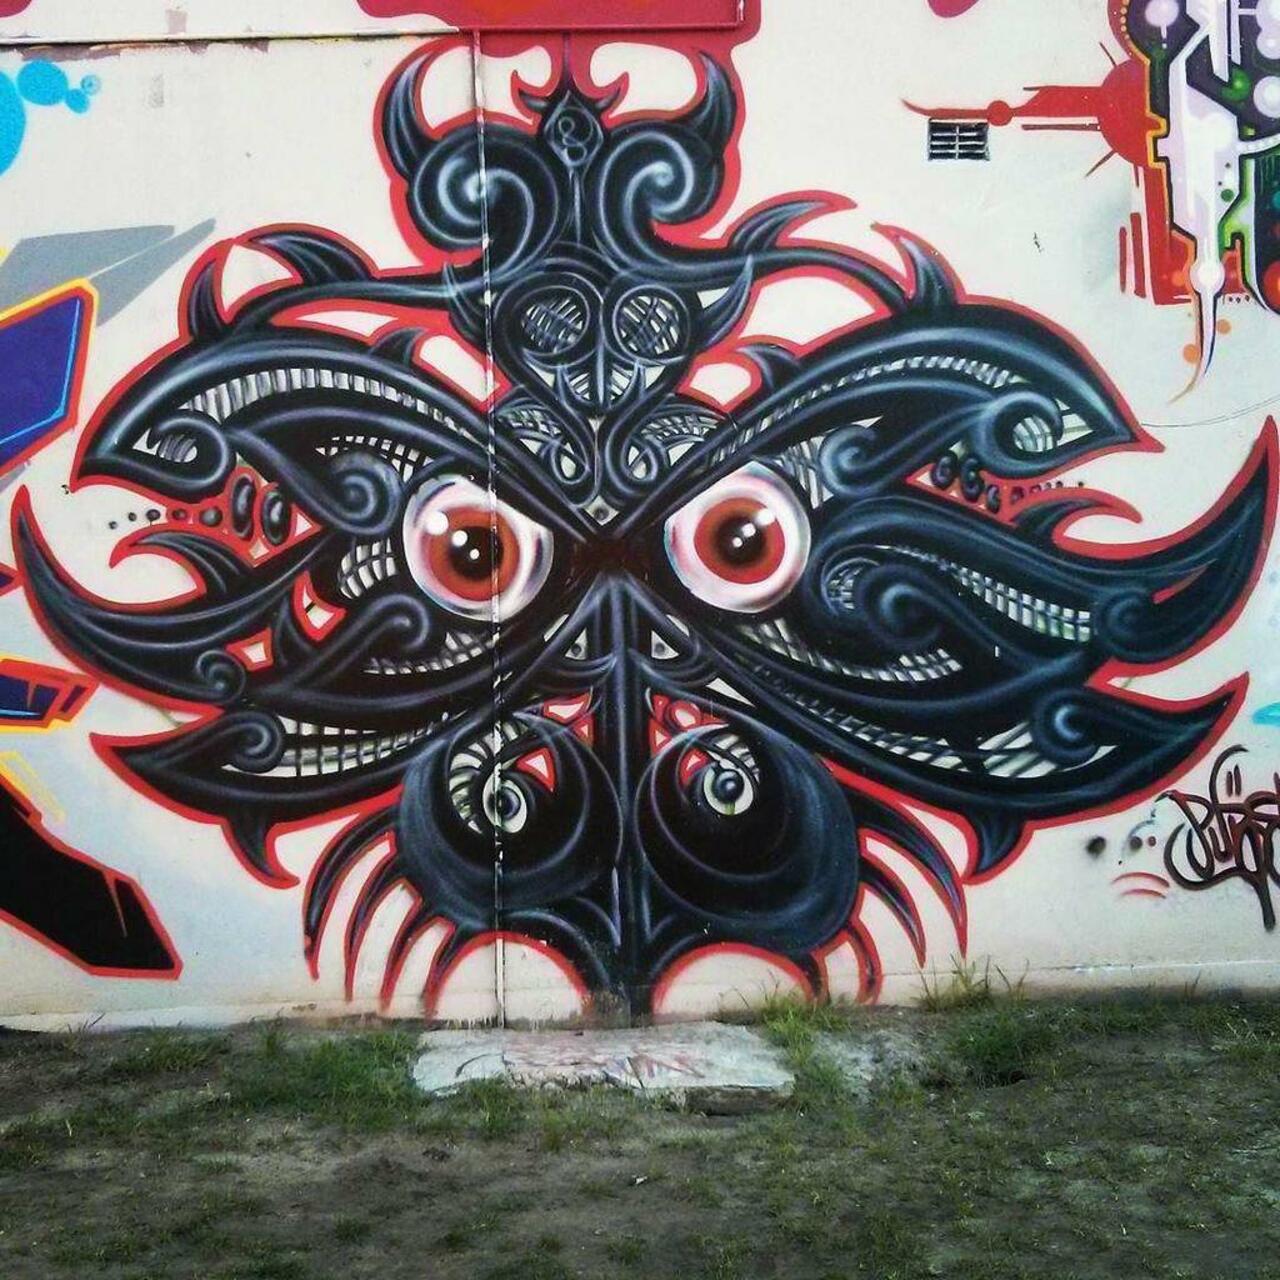 RT http://twitter.com/Graffiso/status/654700657836879872 #ifttt #sydney #sydneygraffiti #newtown #rsa_graffiti #arteurbano #streetart #graffiti… http://t.co/rqR9VjJ4s2